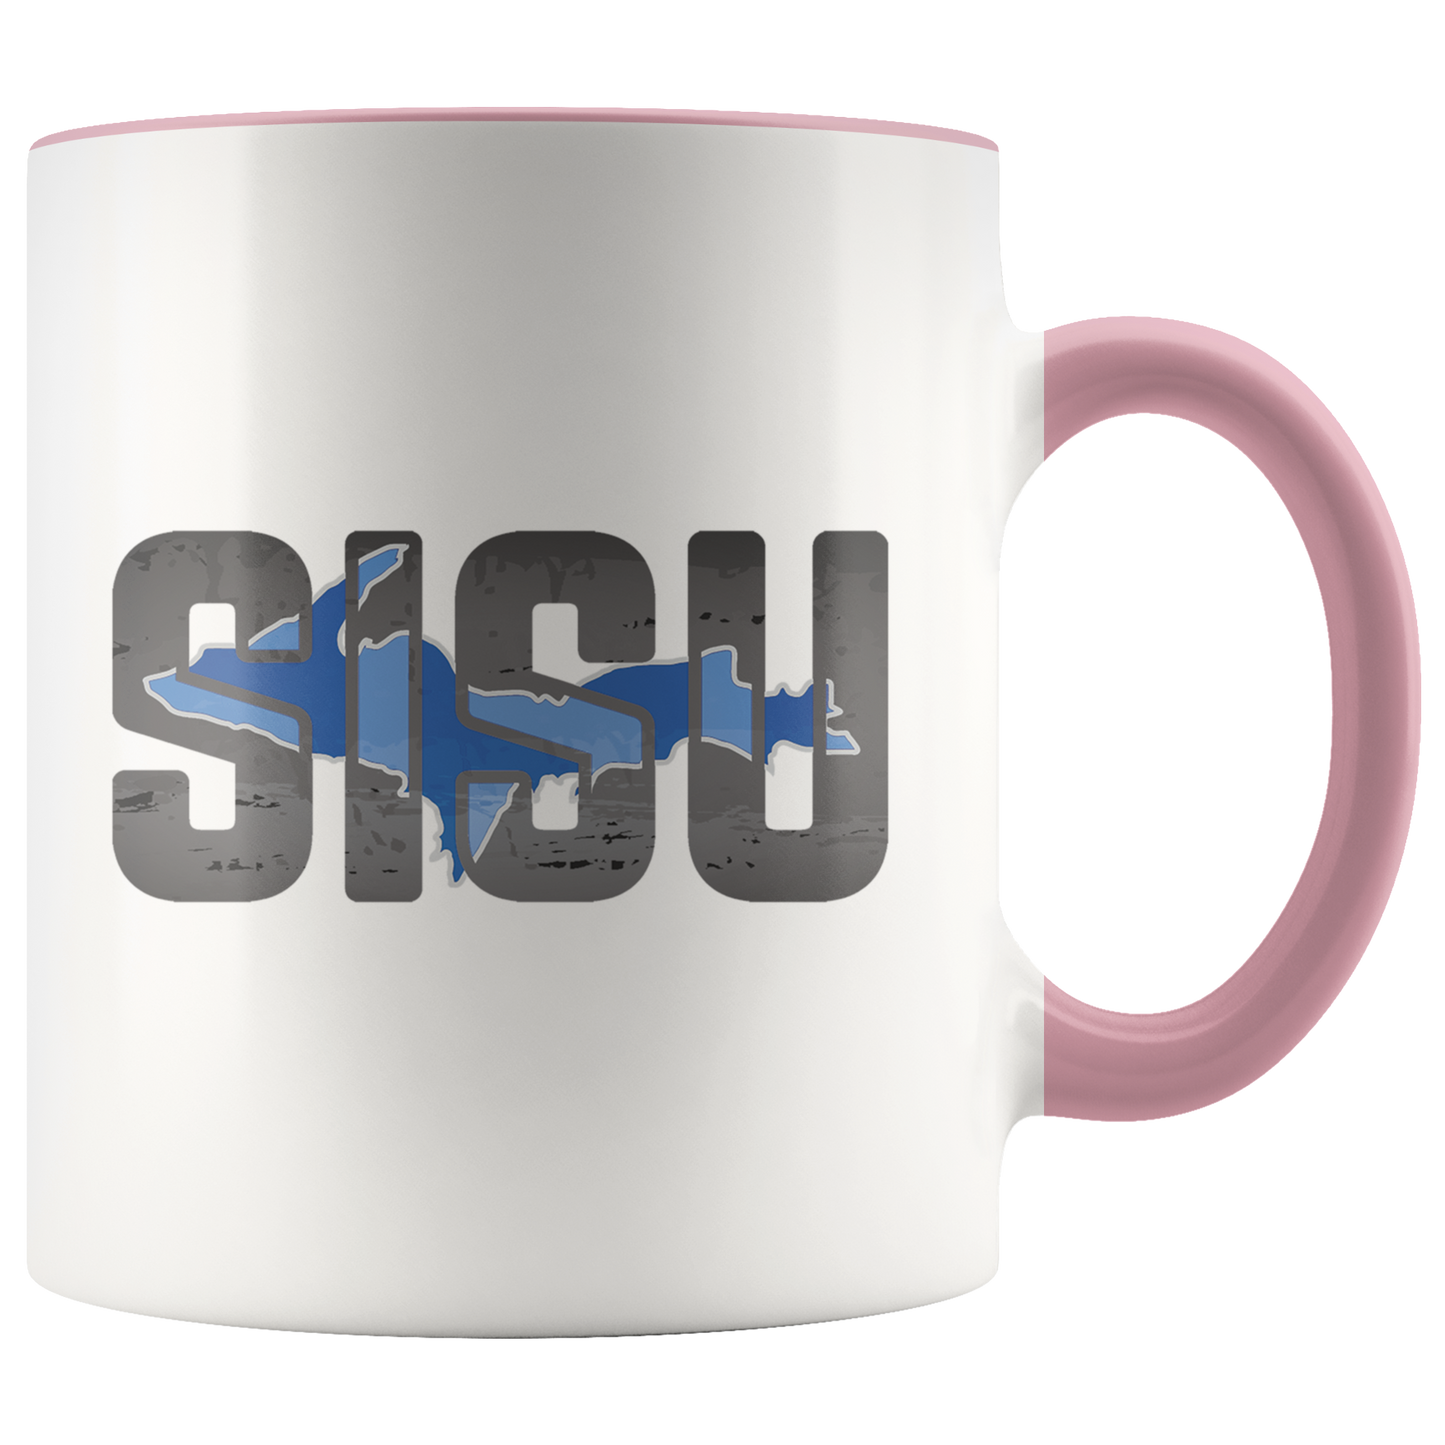 Finnish SISU Mug | Upper Michigan Coffee Cup